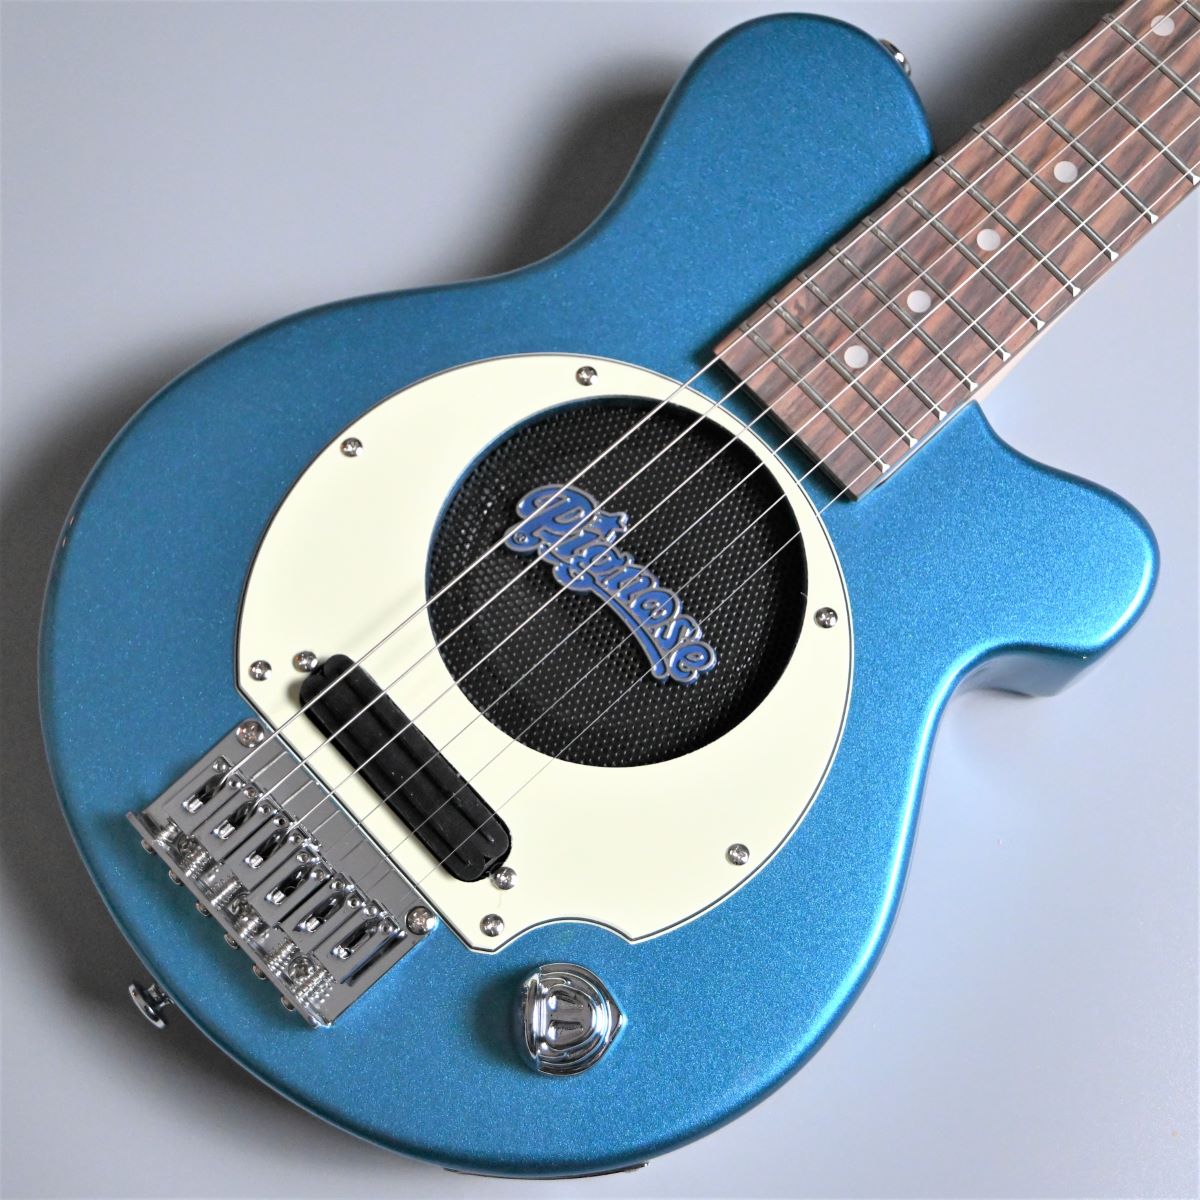 Pignose PGG200 MBL【現物写真】 スピーカー内蔵ミニエレキギター